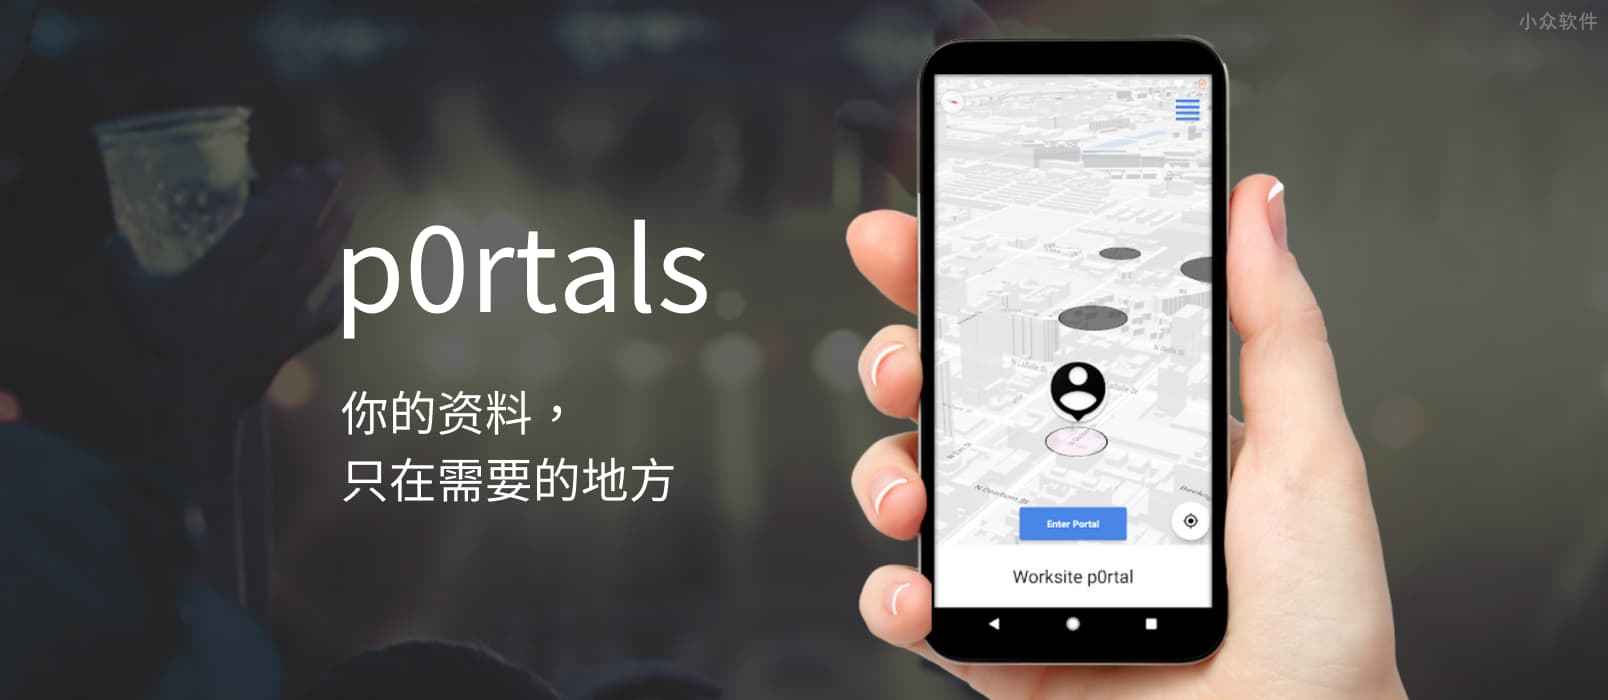 p0rtals - 你的资料，只在需要的地方[Android] 1